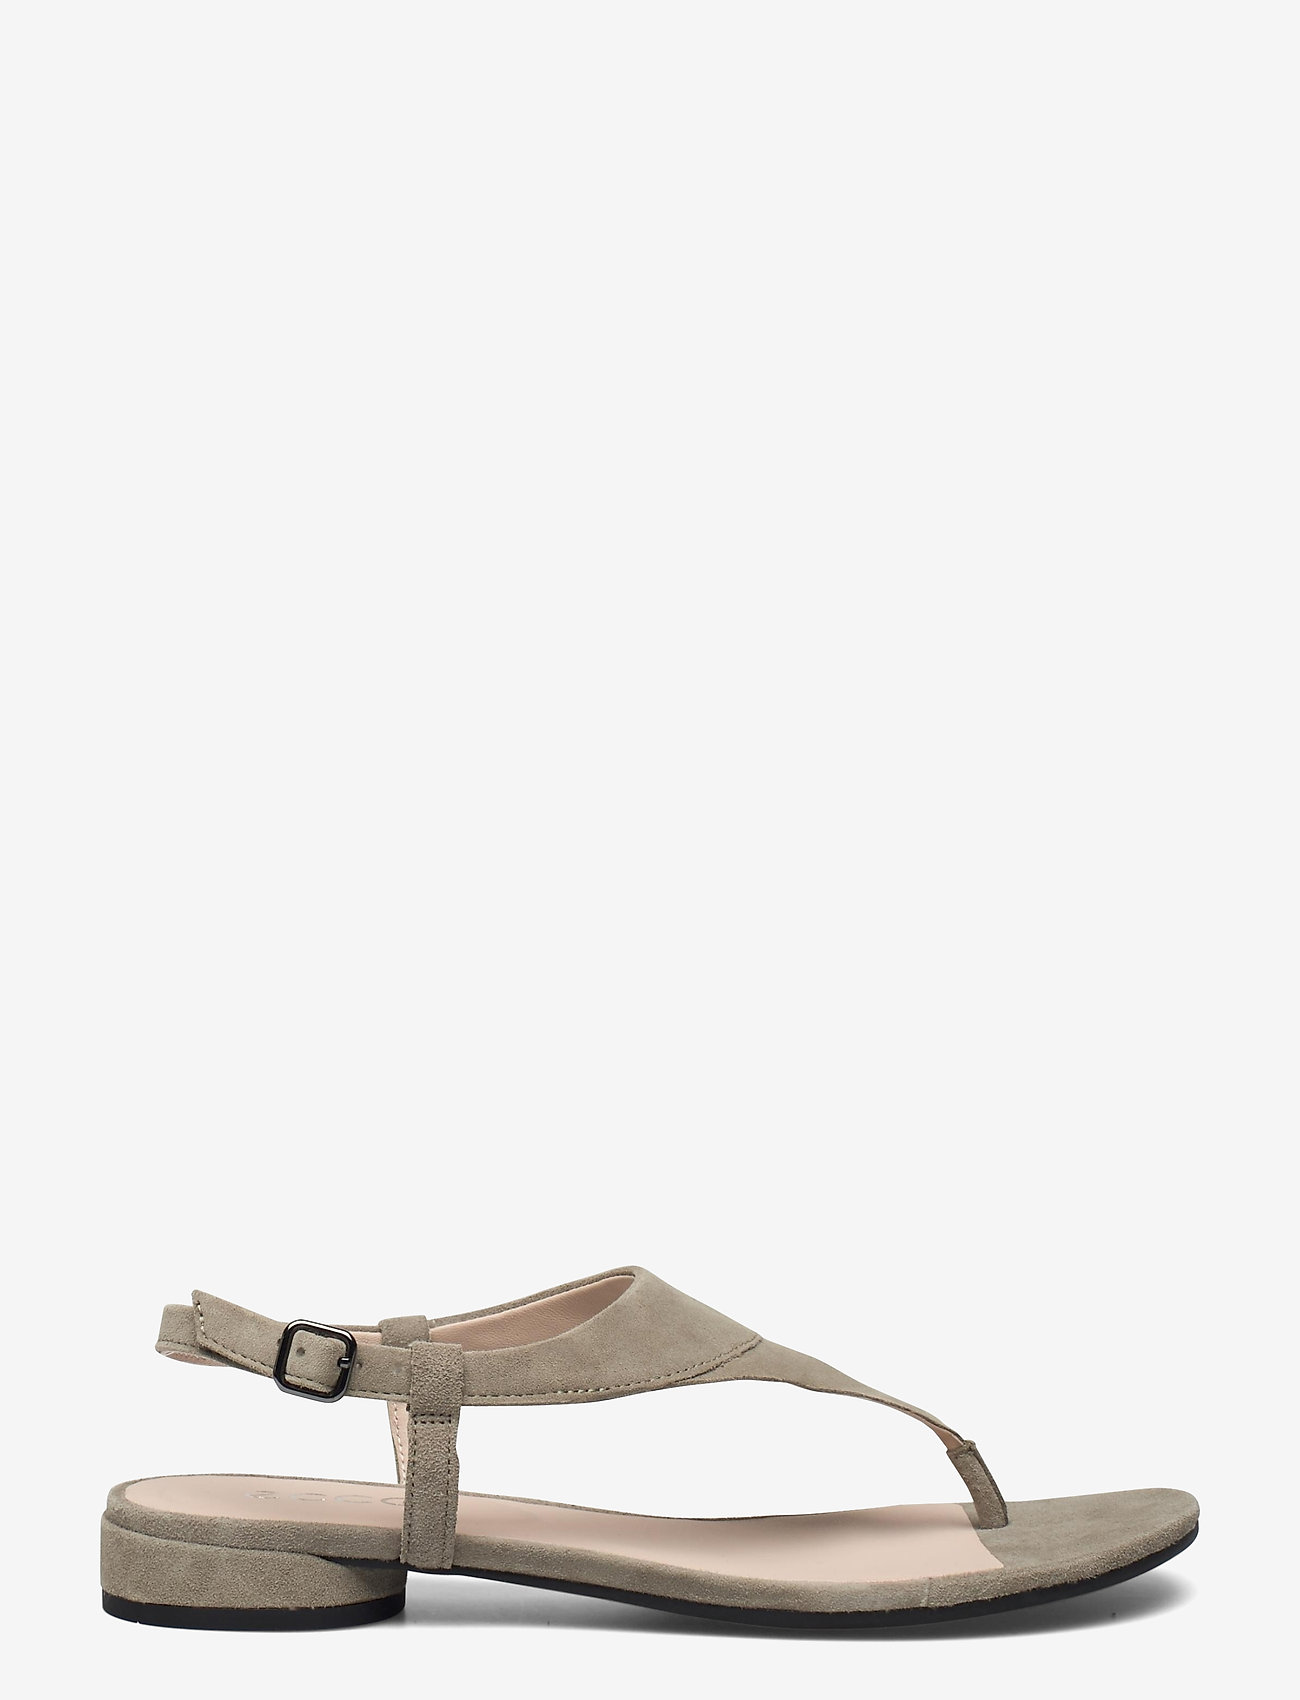 Buy > ecco w flat sandal ii > in stock